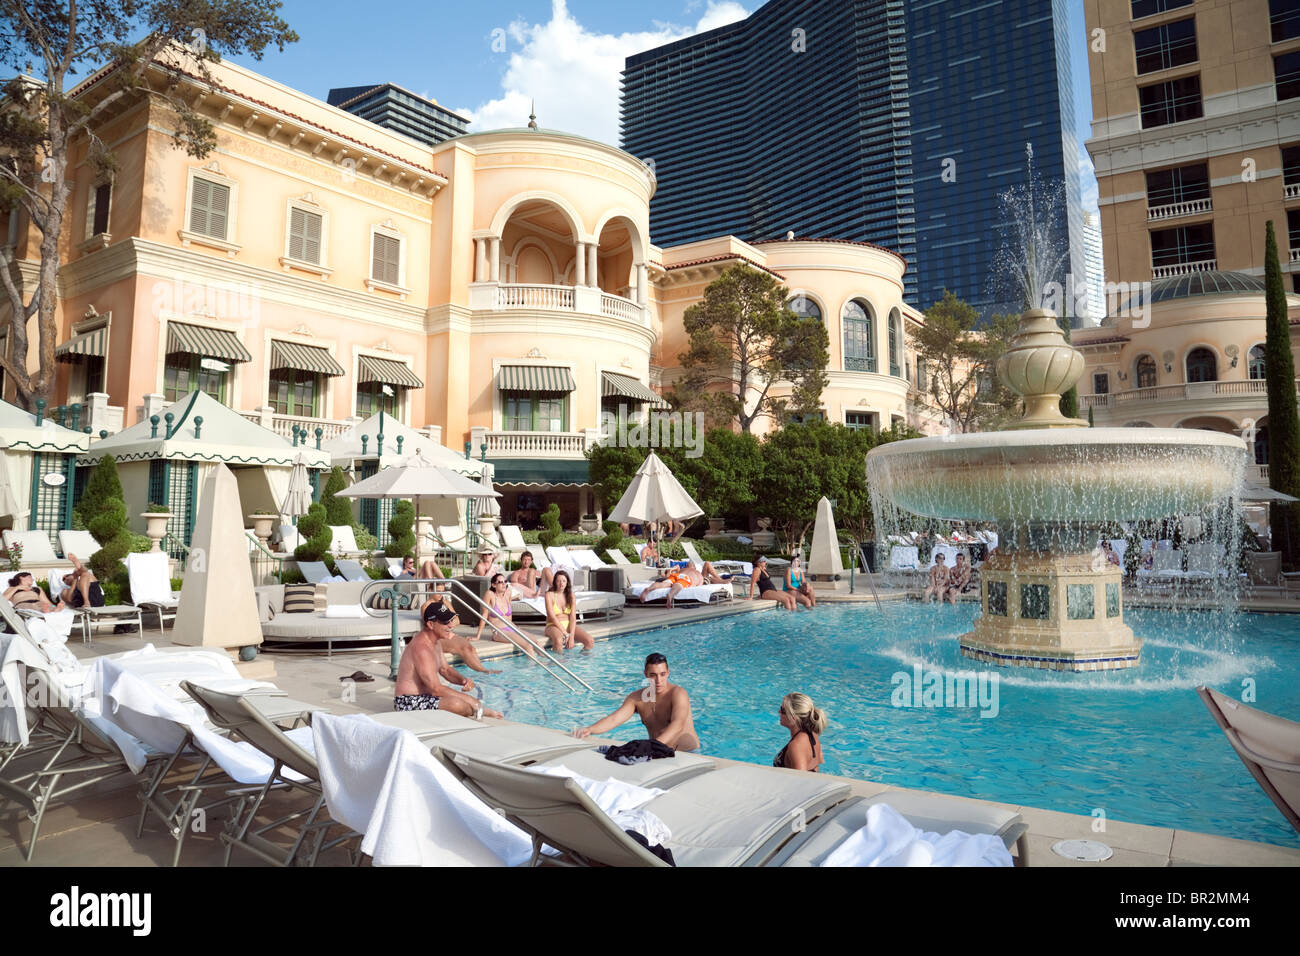 The swimming pools at the Bellagio Hotel, Las Vegas USA Stock Photo - Alamy